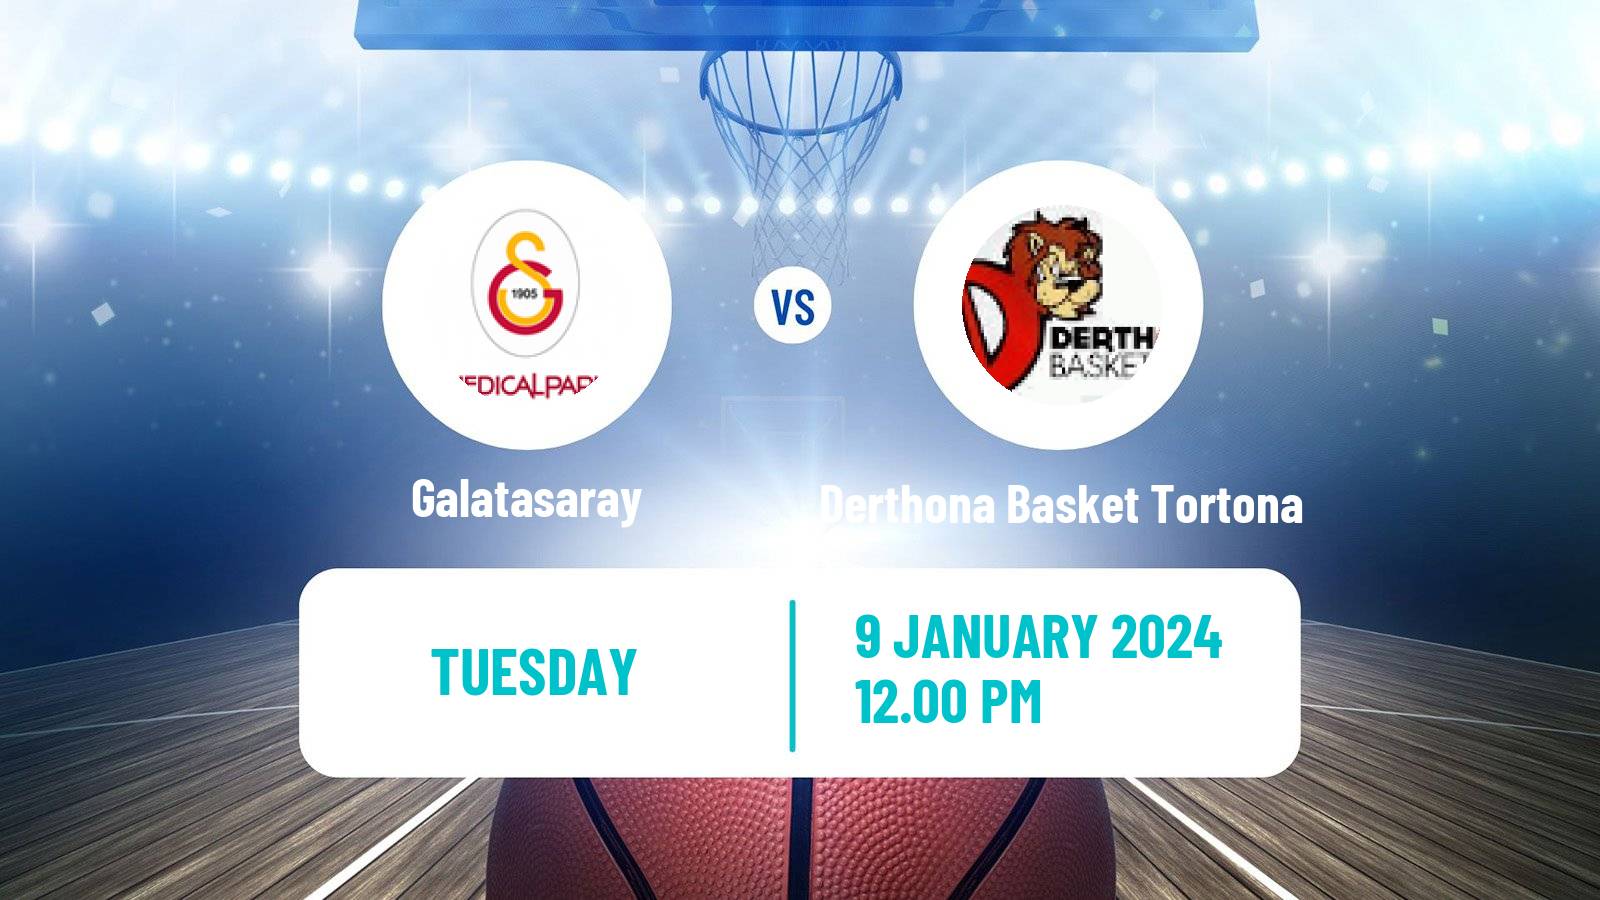 Basketball Champions League Basketball Galatasaray - Derthona Basket Tortona